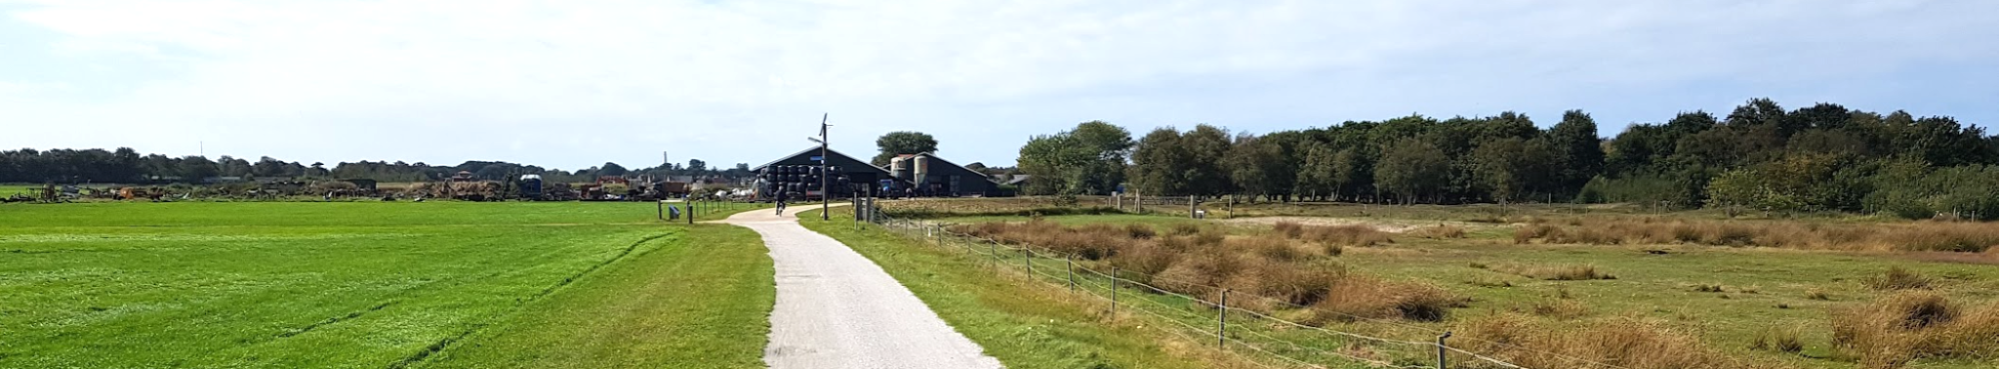 Dutch farm landscape